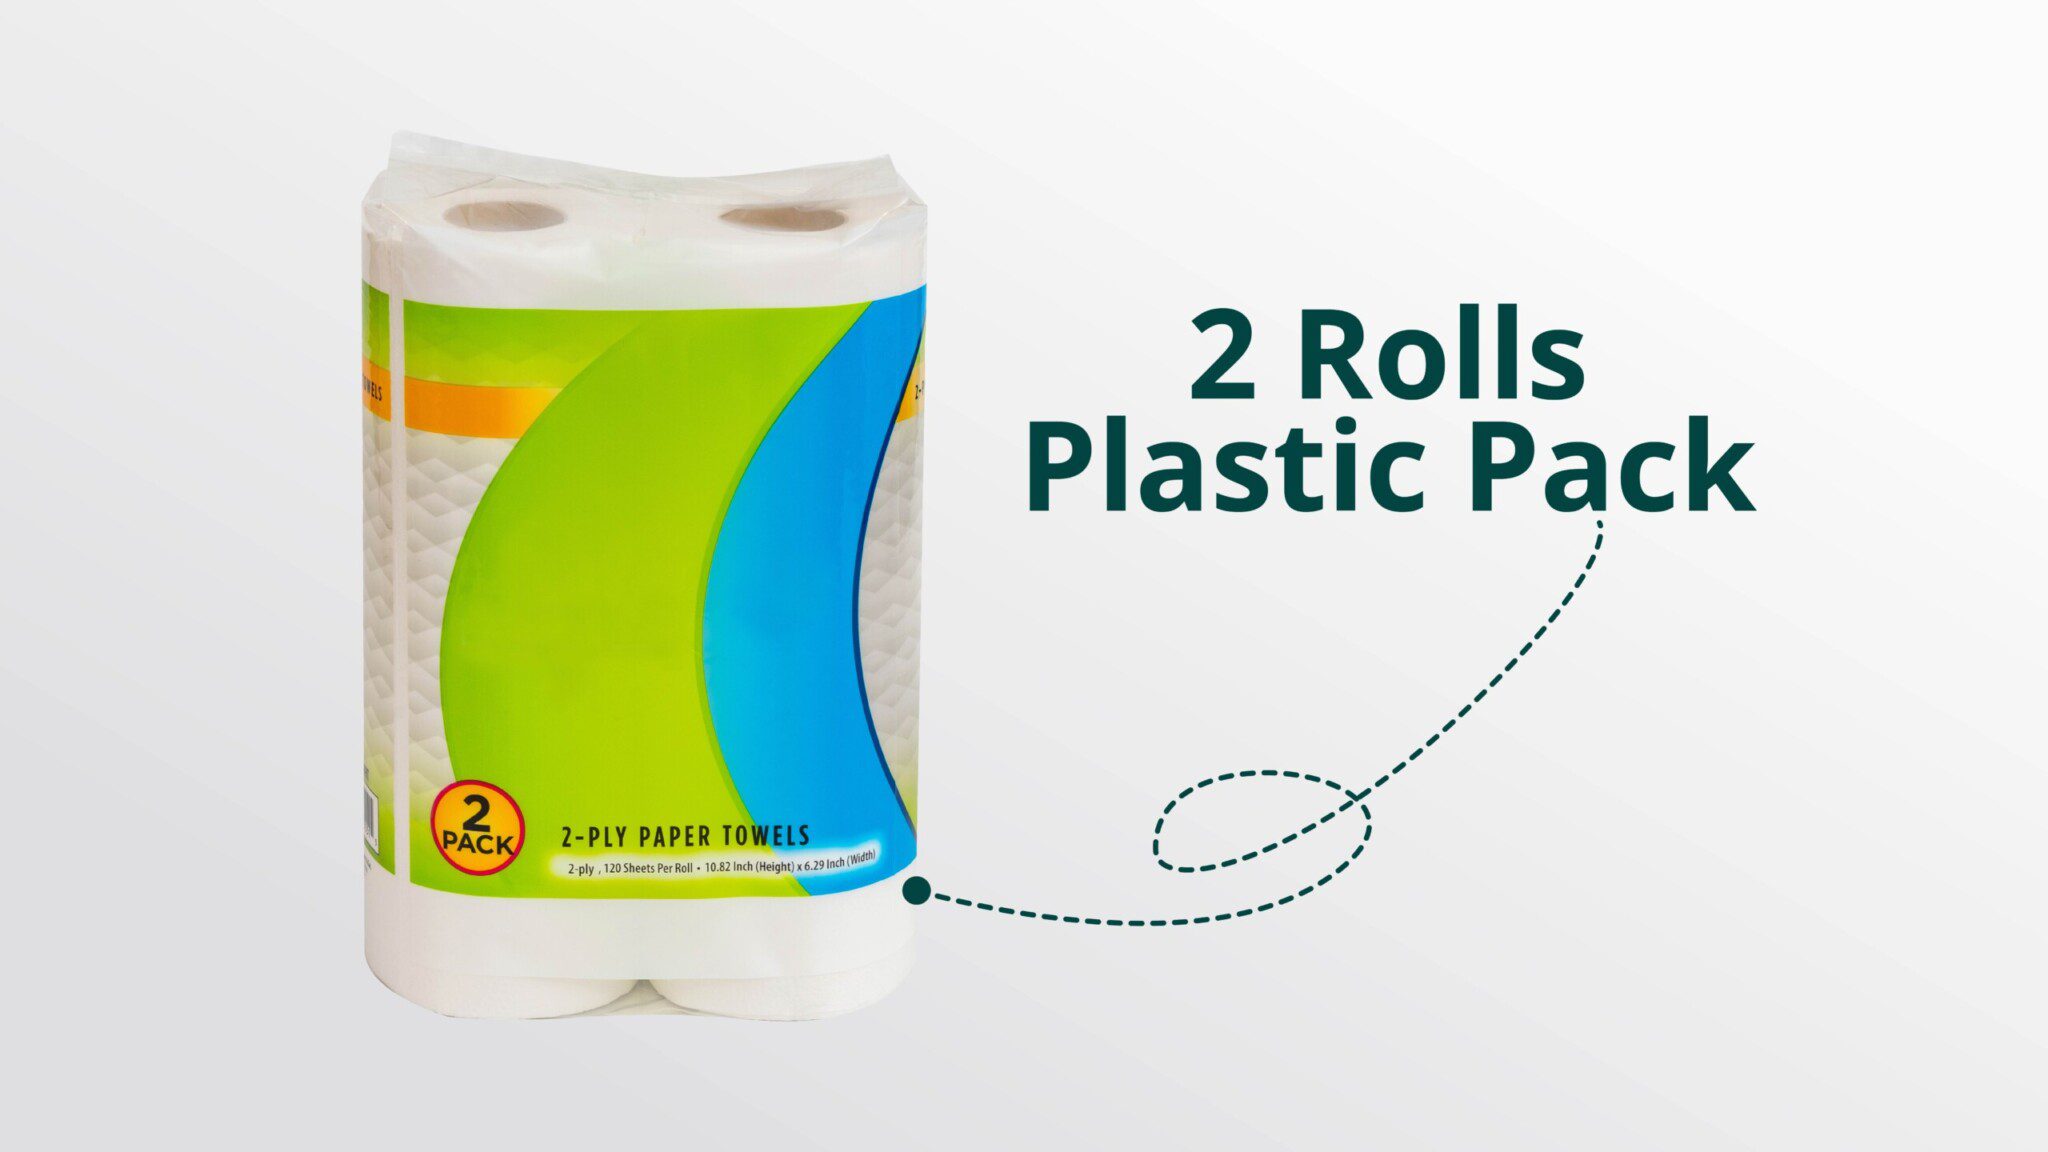 2 rolls plastic pack pack kitchen paper towels